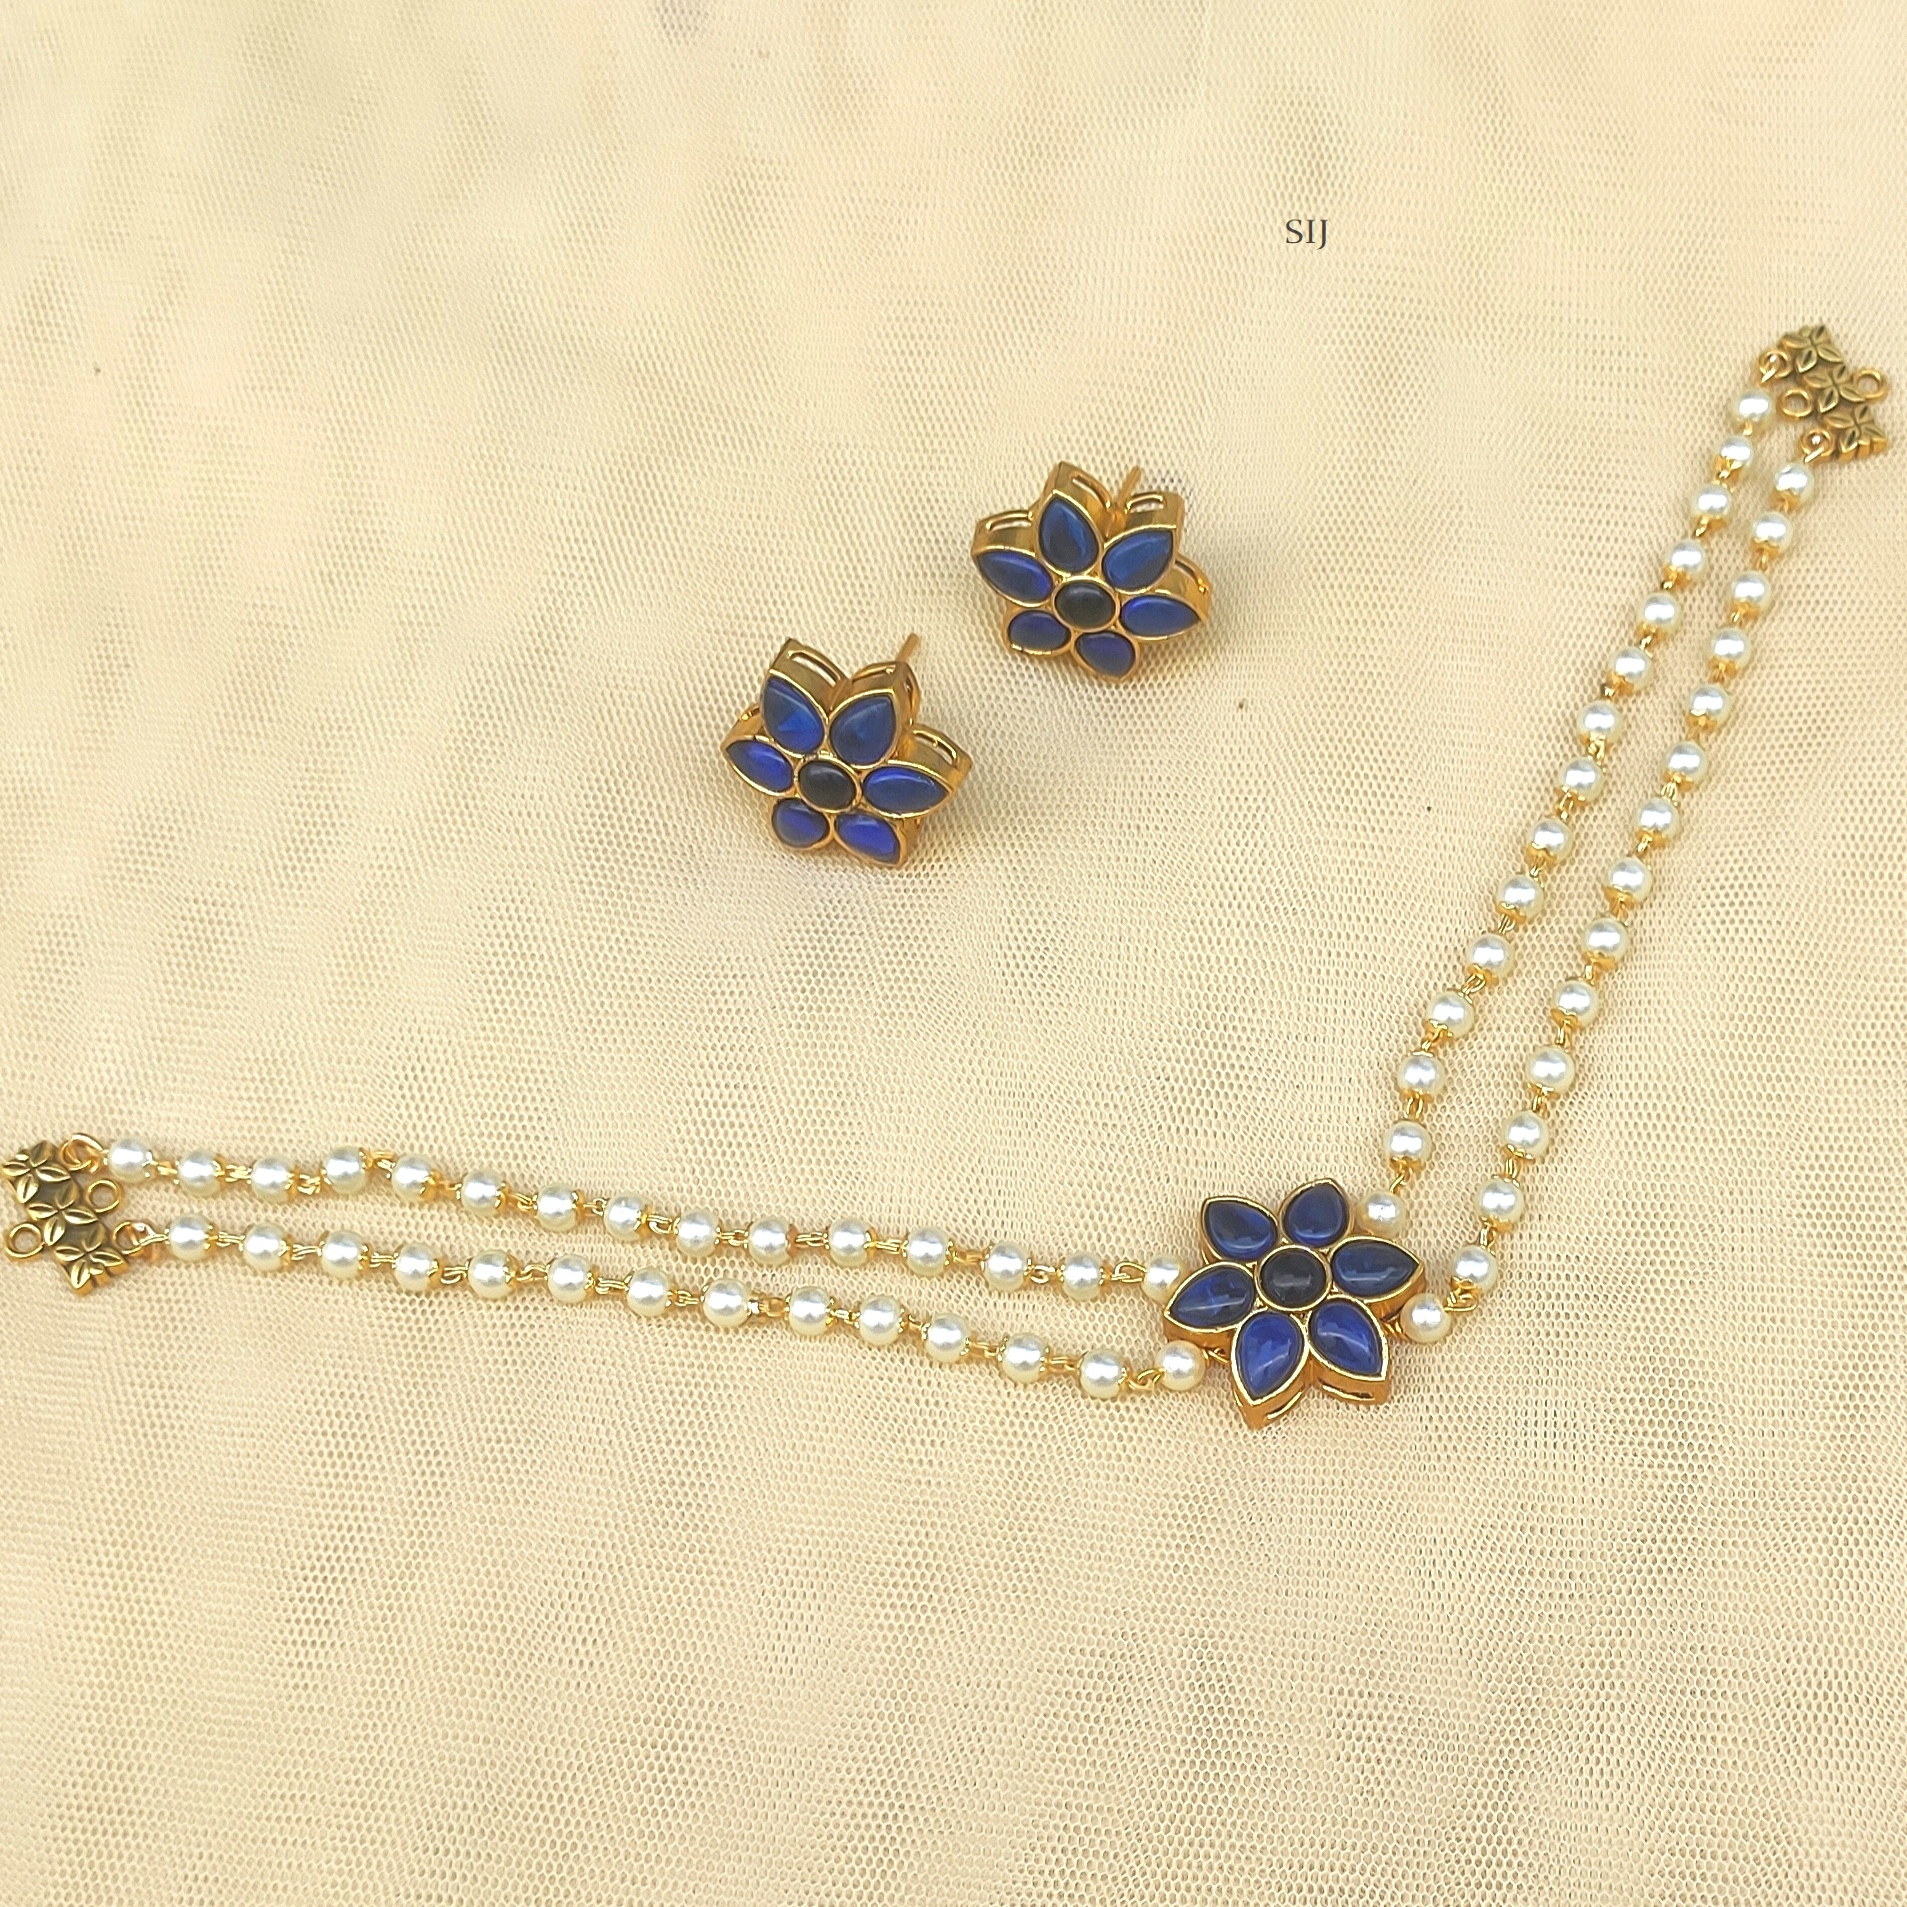 Pearl Choker with Blue Stone Flower Design Pendant